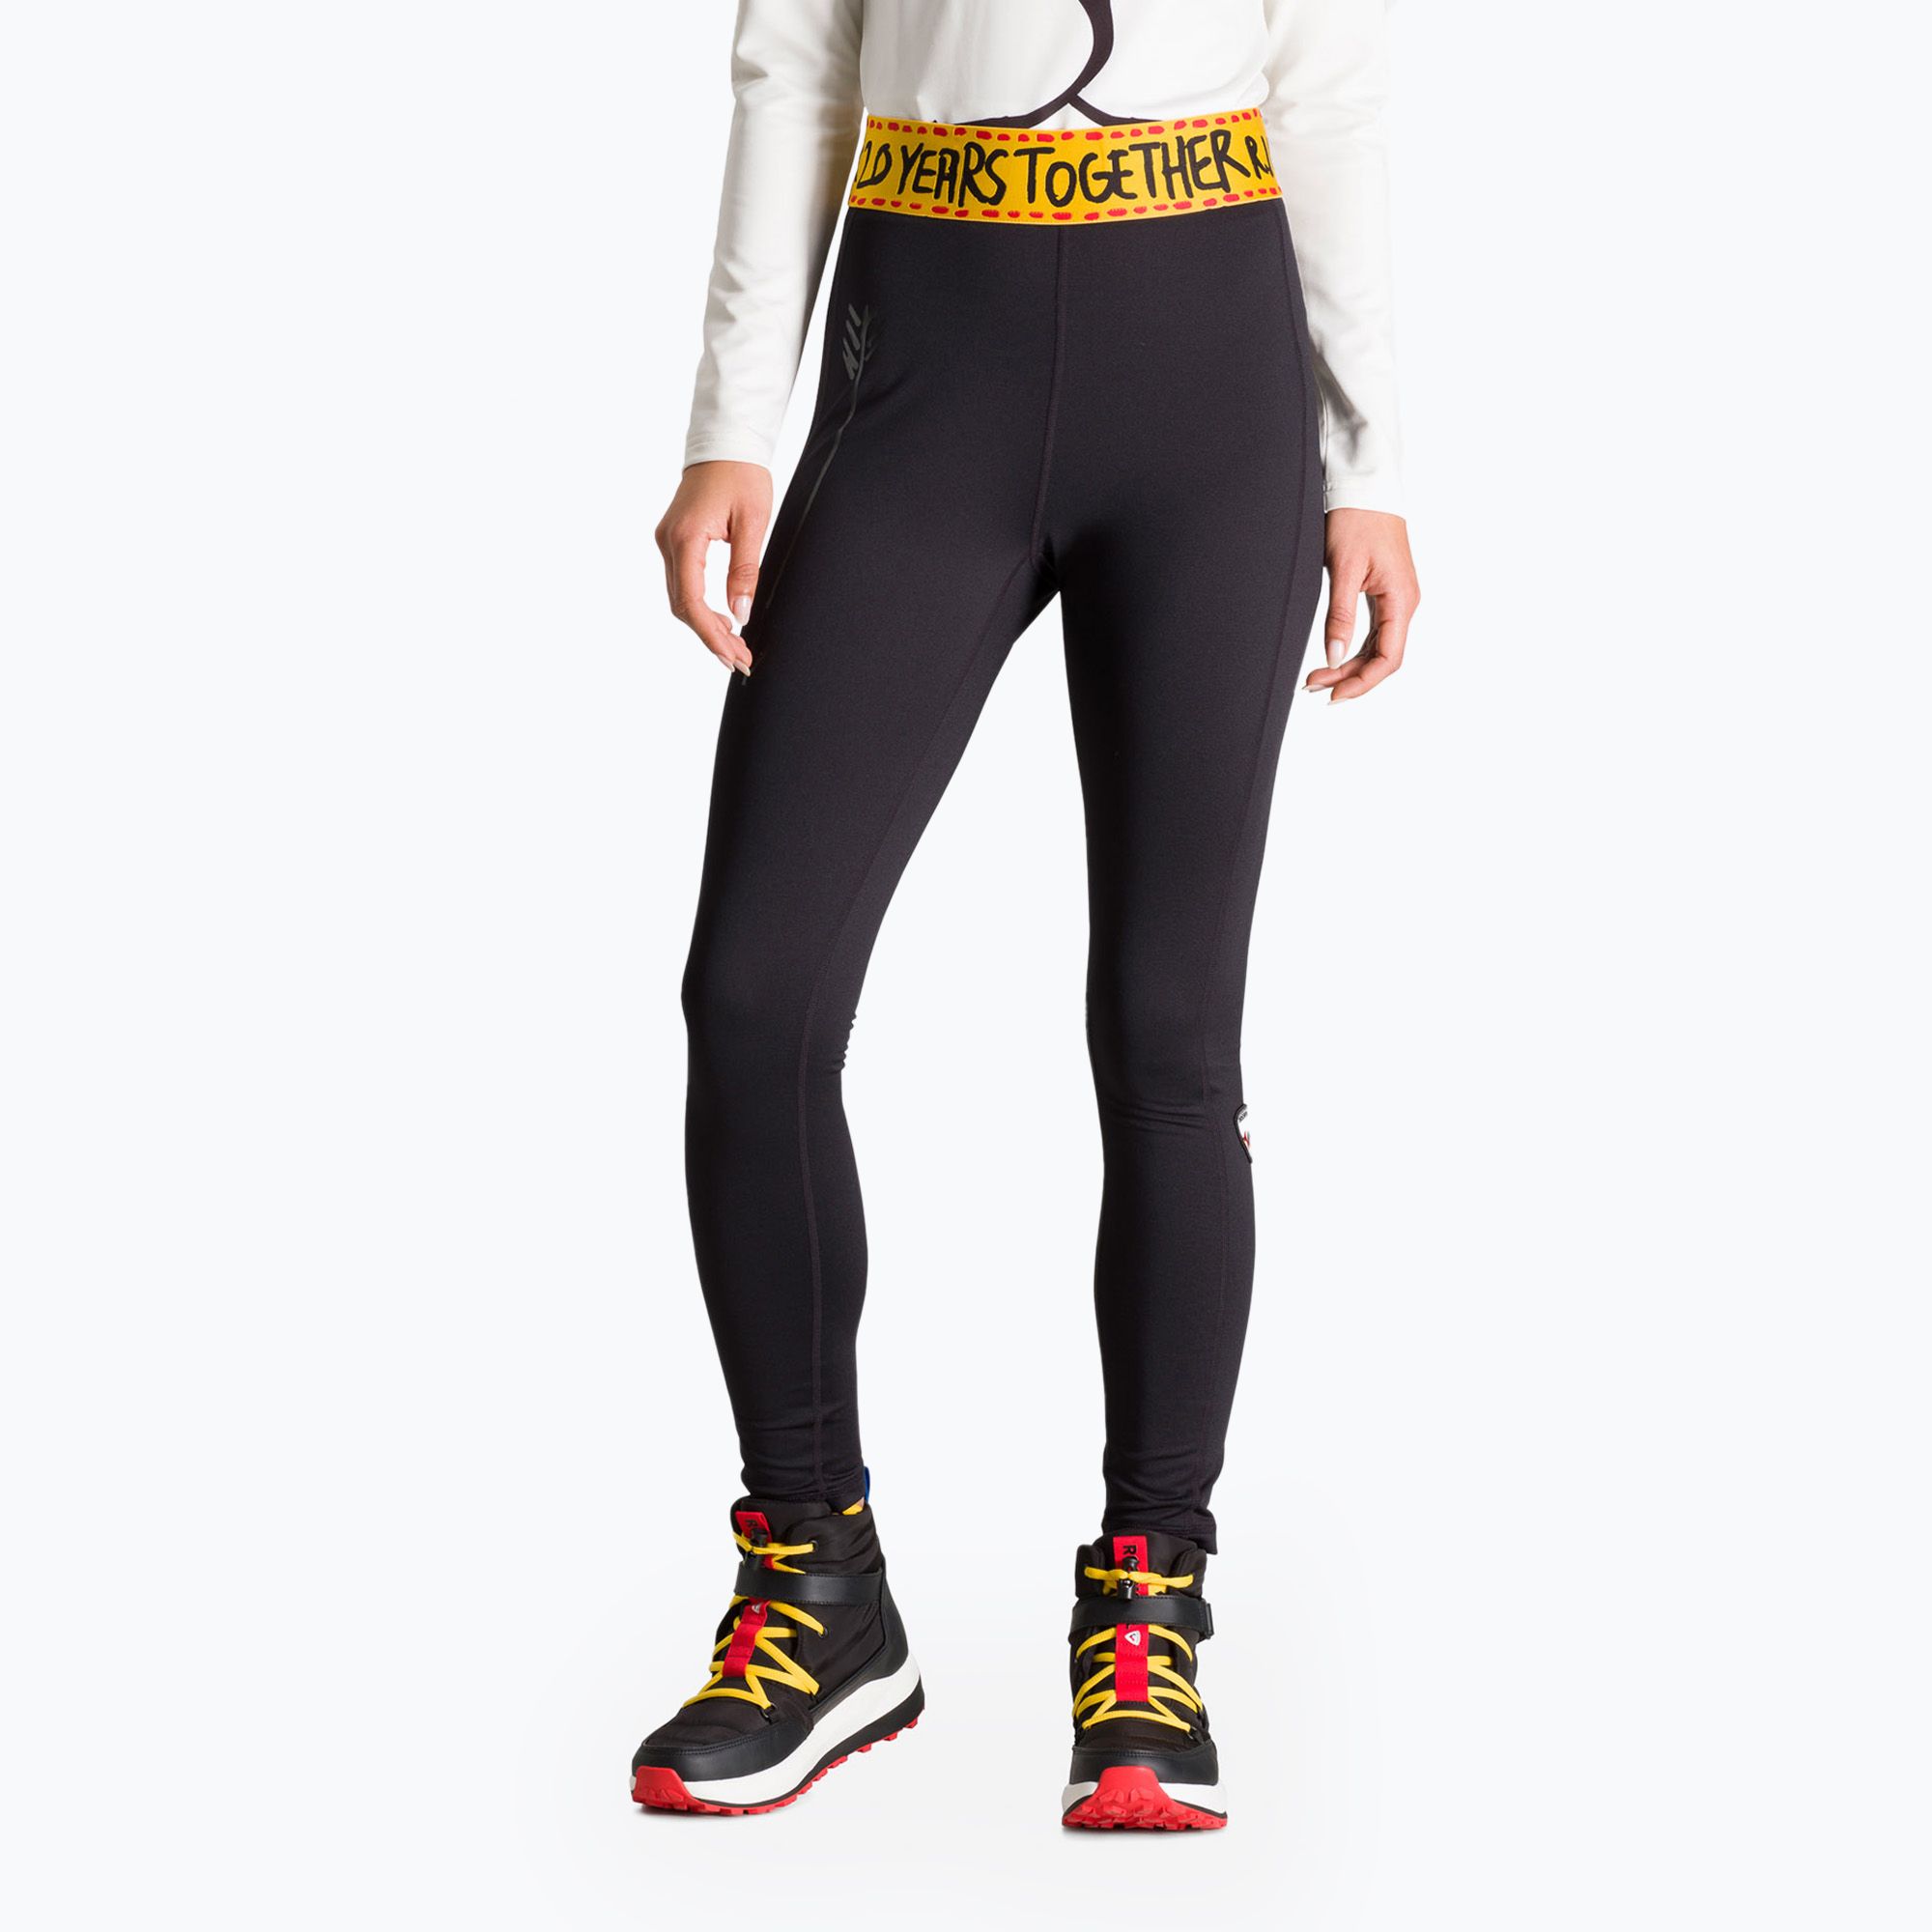 https://sportano.com/img/986c30c27a3d26a3ee16c136f92f4ff5/3/6/3607683814329_01-jpg/women-s-cross-country-ski-leggings-rossignol-w-bessi-tights-black-0.jpg